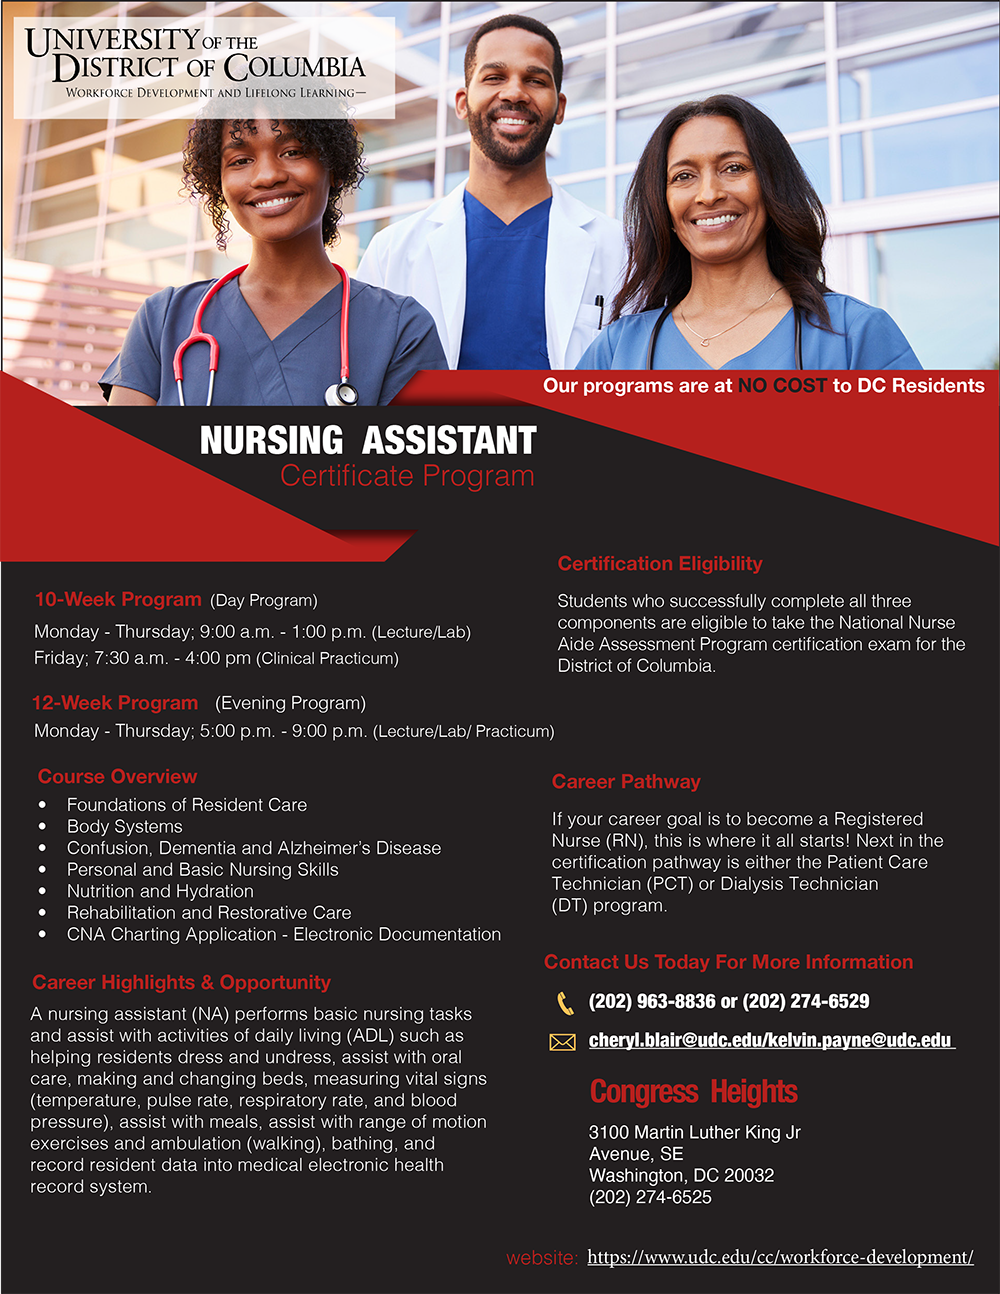 C.N.A. Course Details – Career Nursing Academy